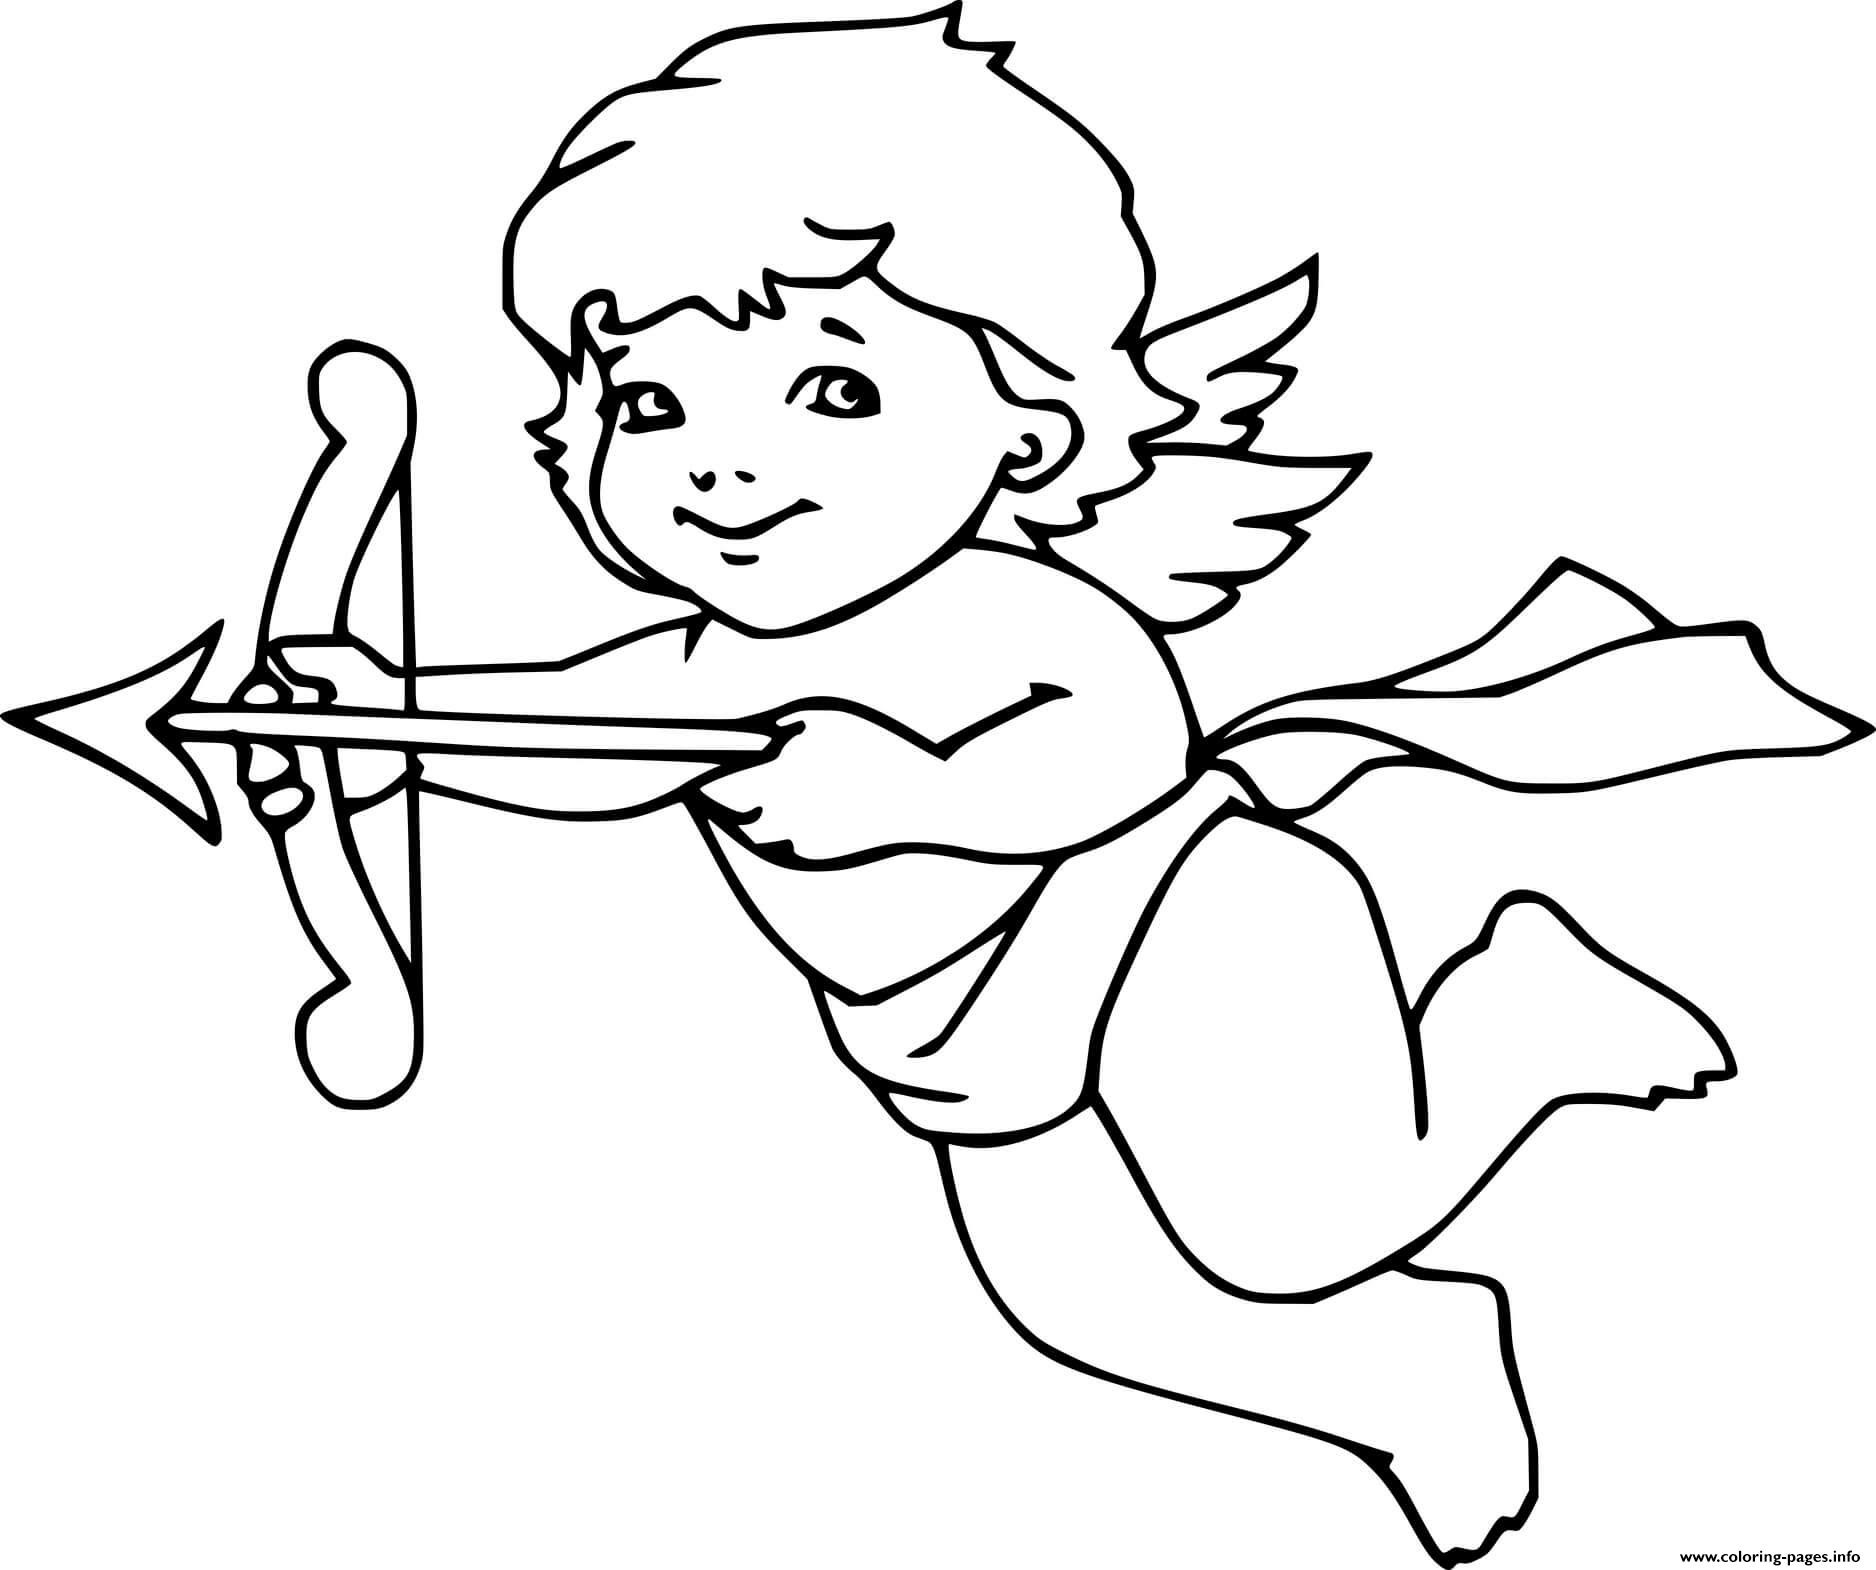 Cupid Makes Choice coloring